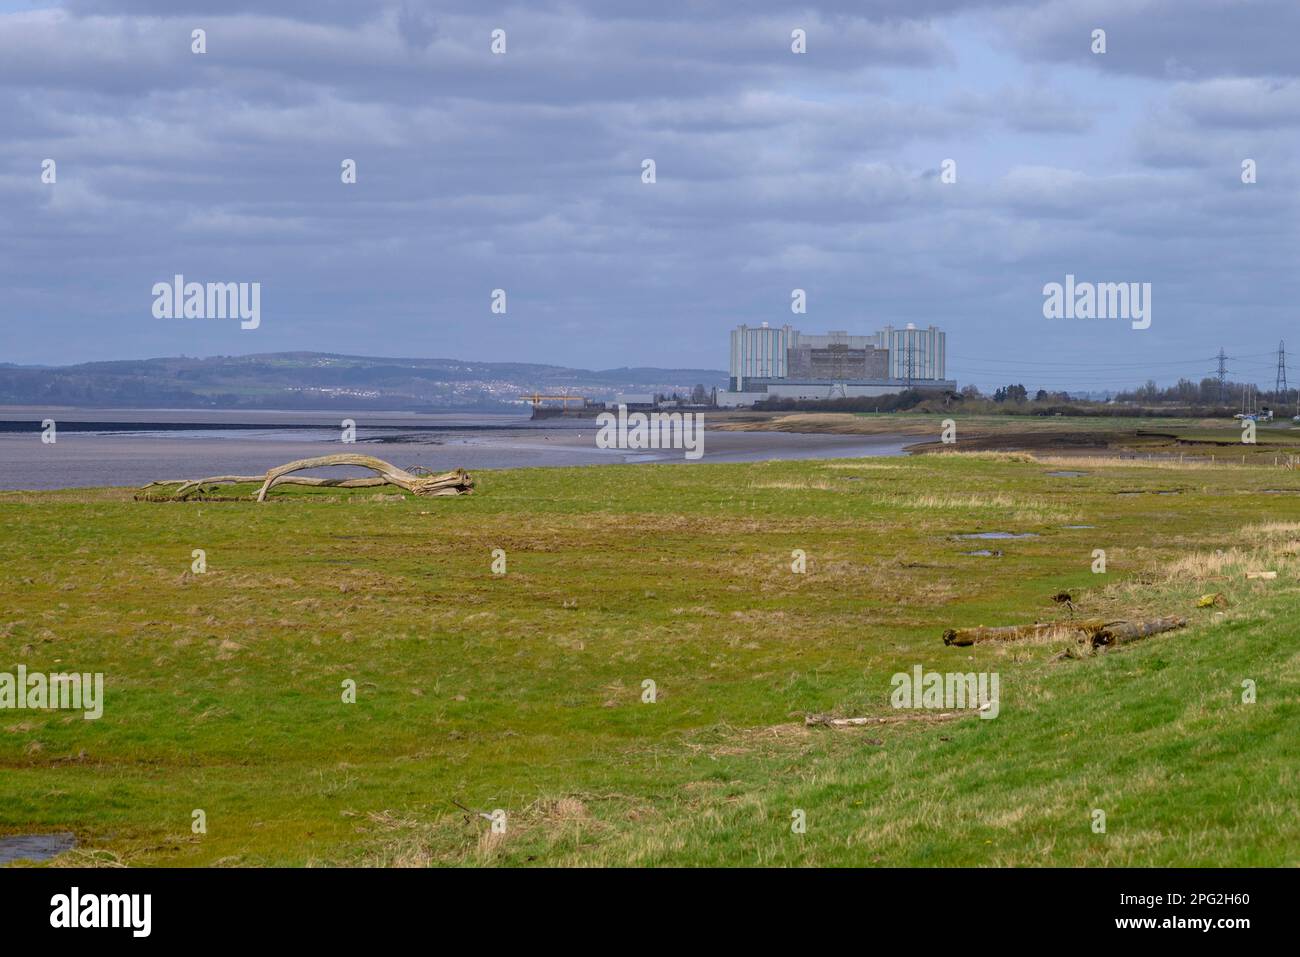 Oldbury nuclear power station on the banks of the River Severn Estuary, Oldbury-on-Severn, South Gloucestershire, England, UK Stock Photo